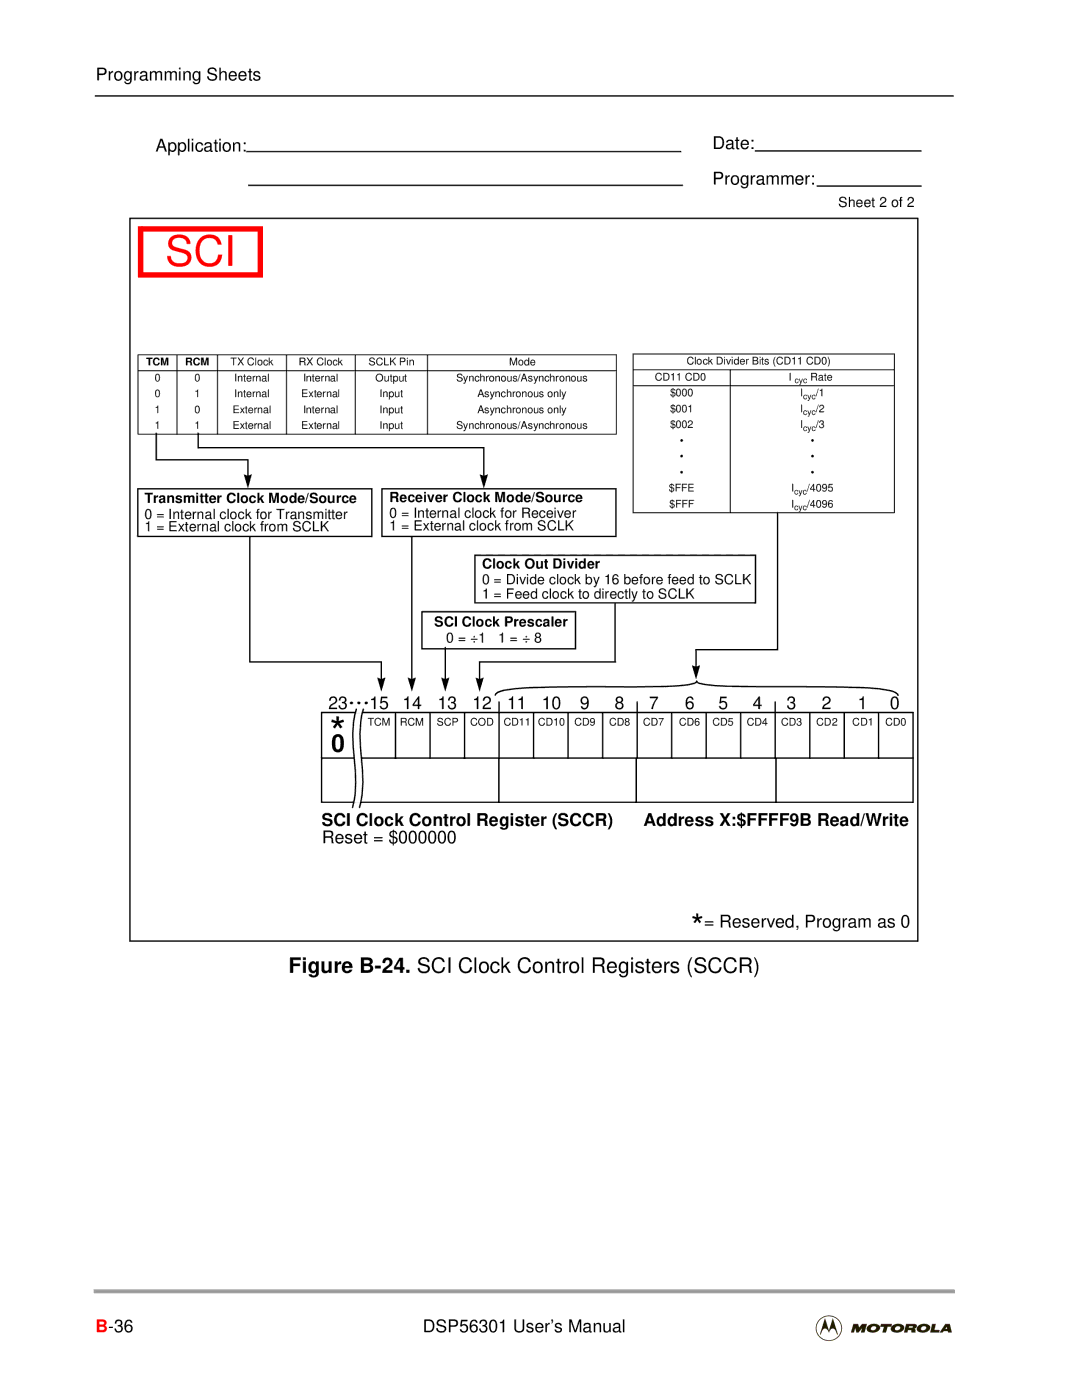 Motorola DSP56301 user manual SCI Clock Control Register Sccr Address X$FFFF9B Read/Write, Receiver Clock Mode/Source 